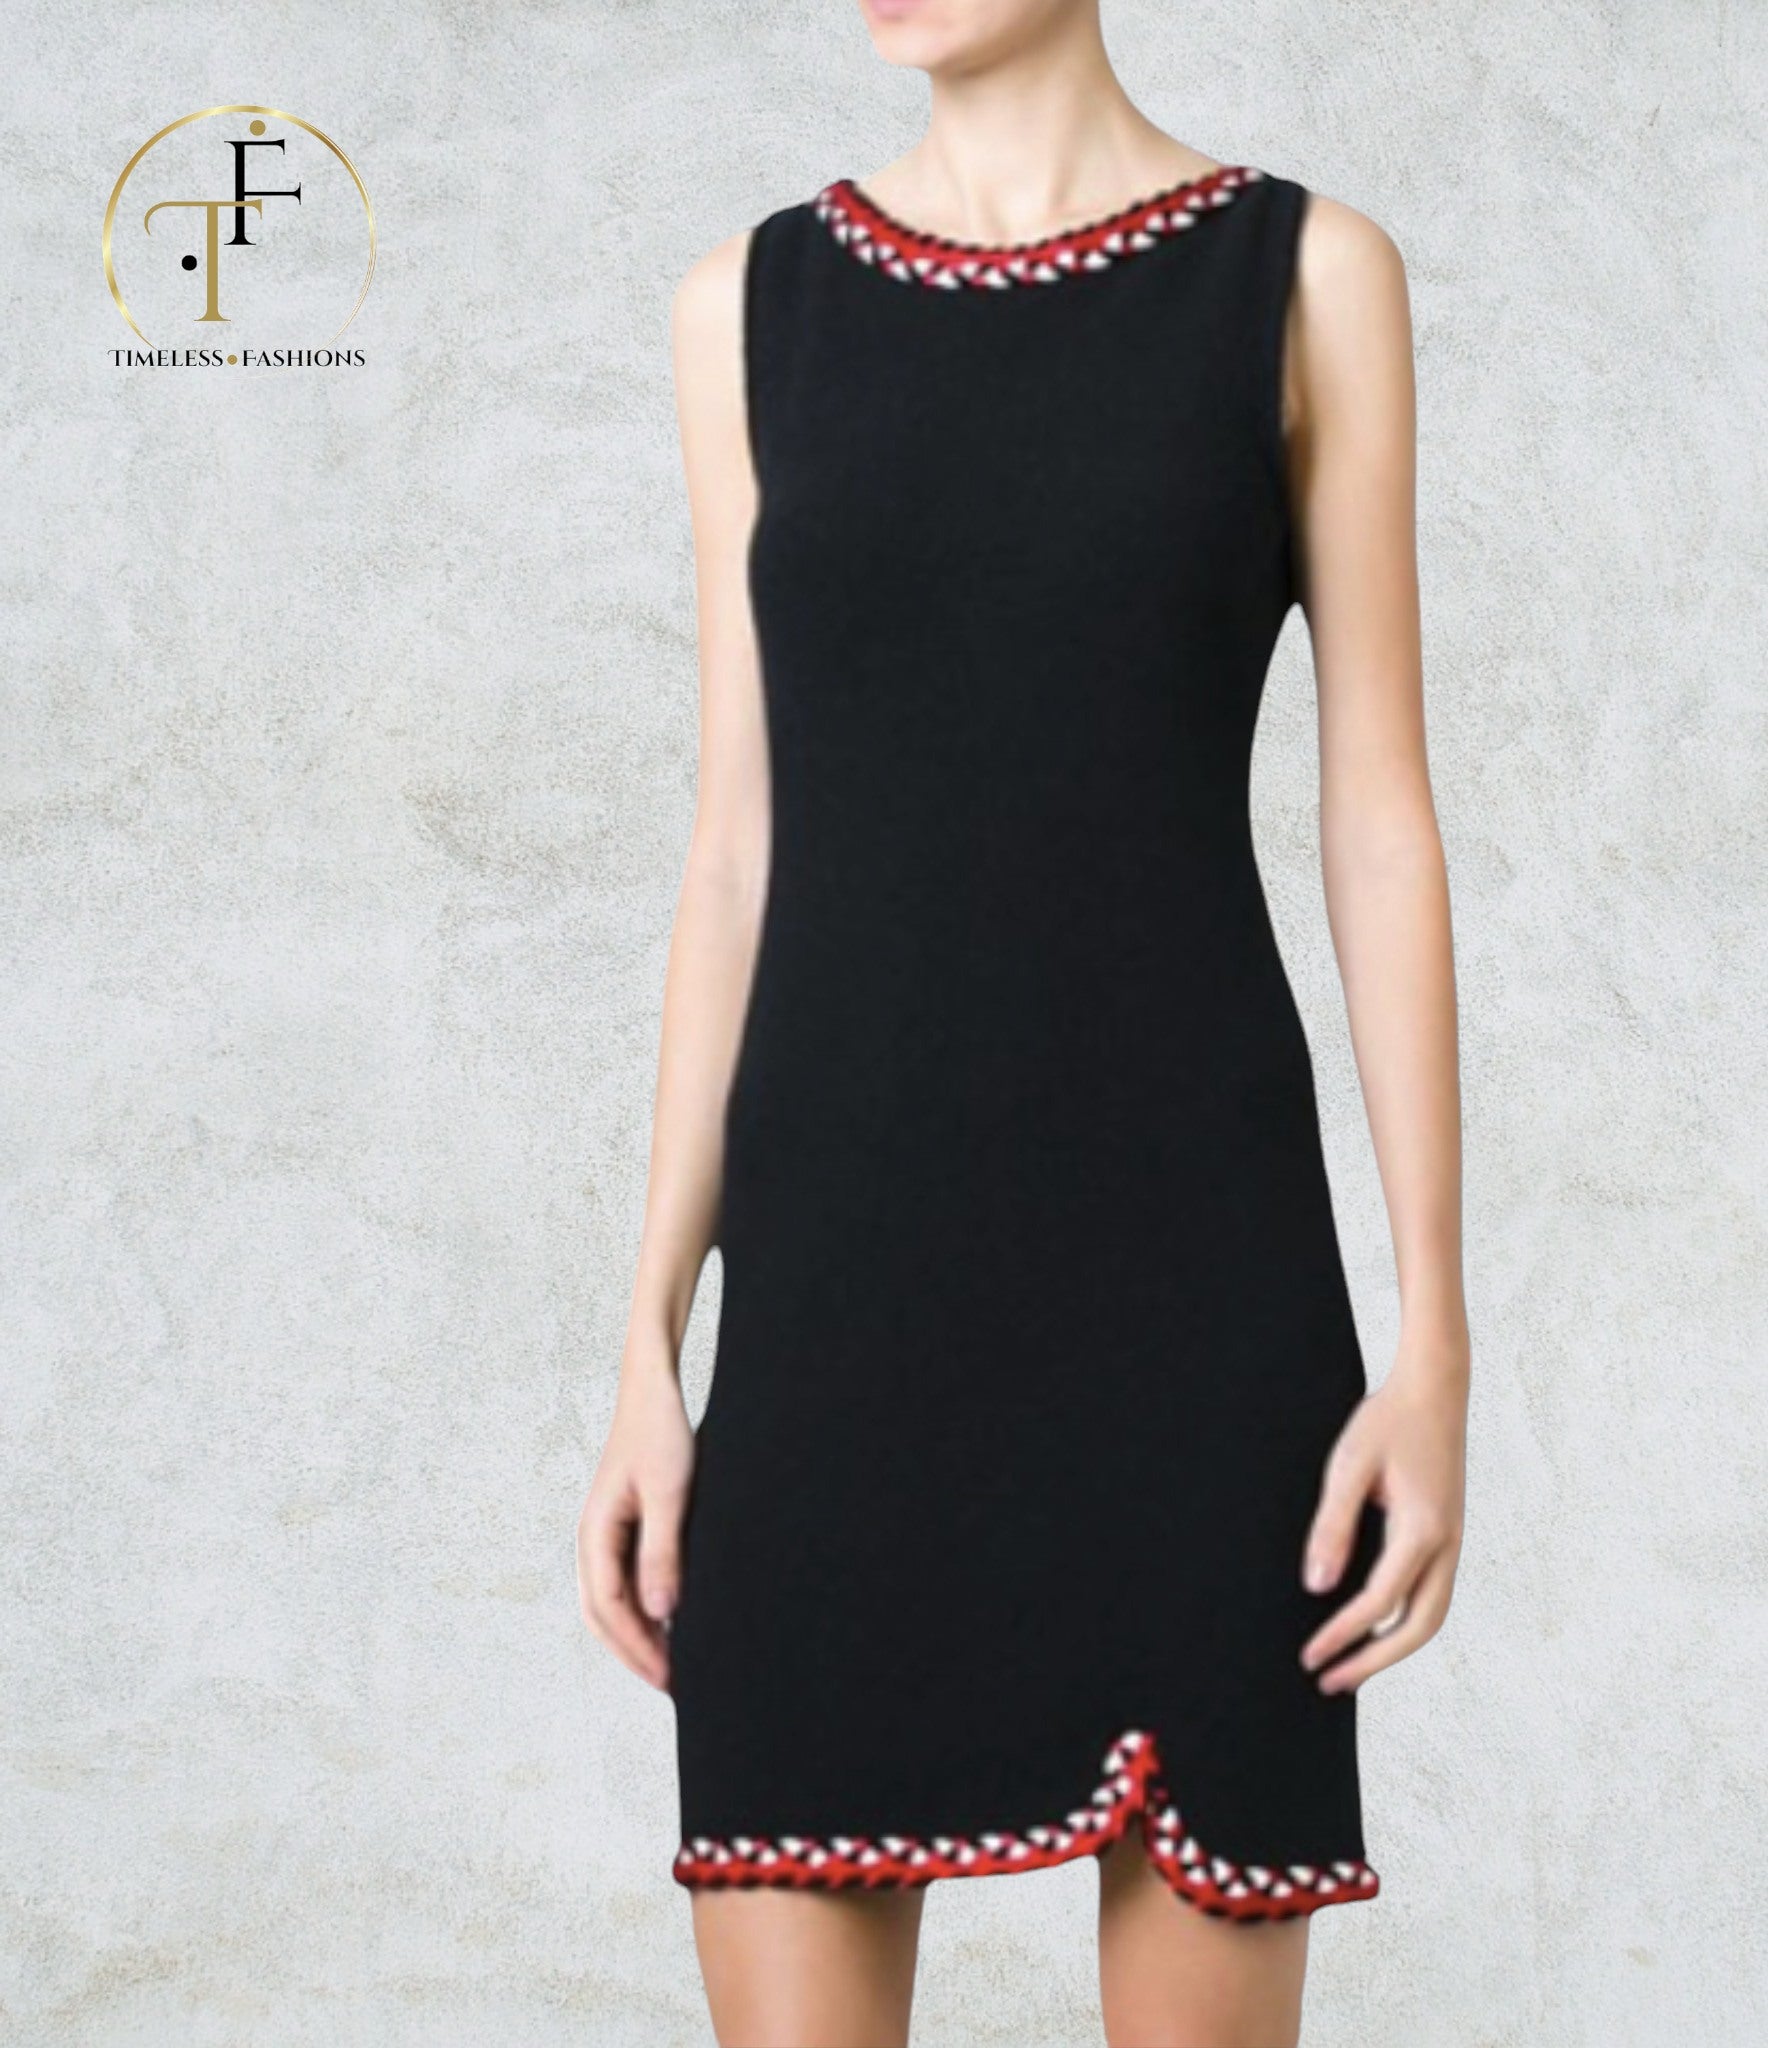 Boutique Moschino Black Cotton Mix Textured Pencil Dress UK 8 US 4 EU 36 IT 40 Timeless Fashions